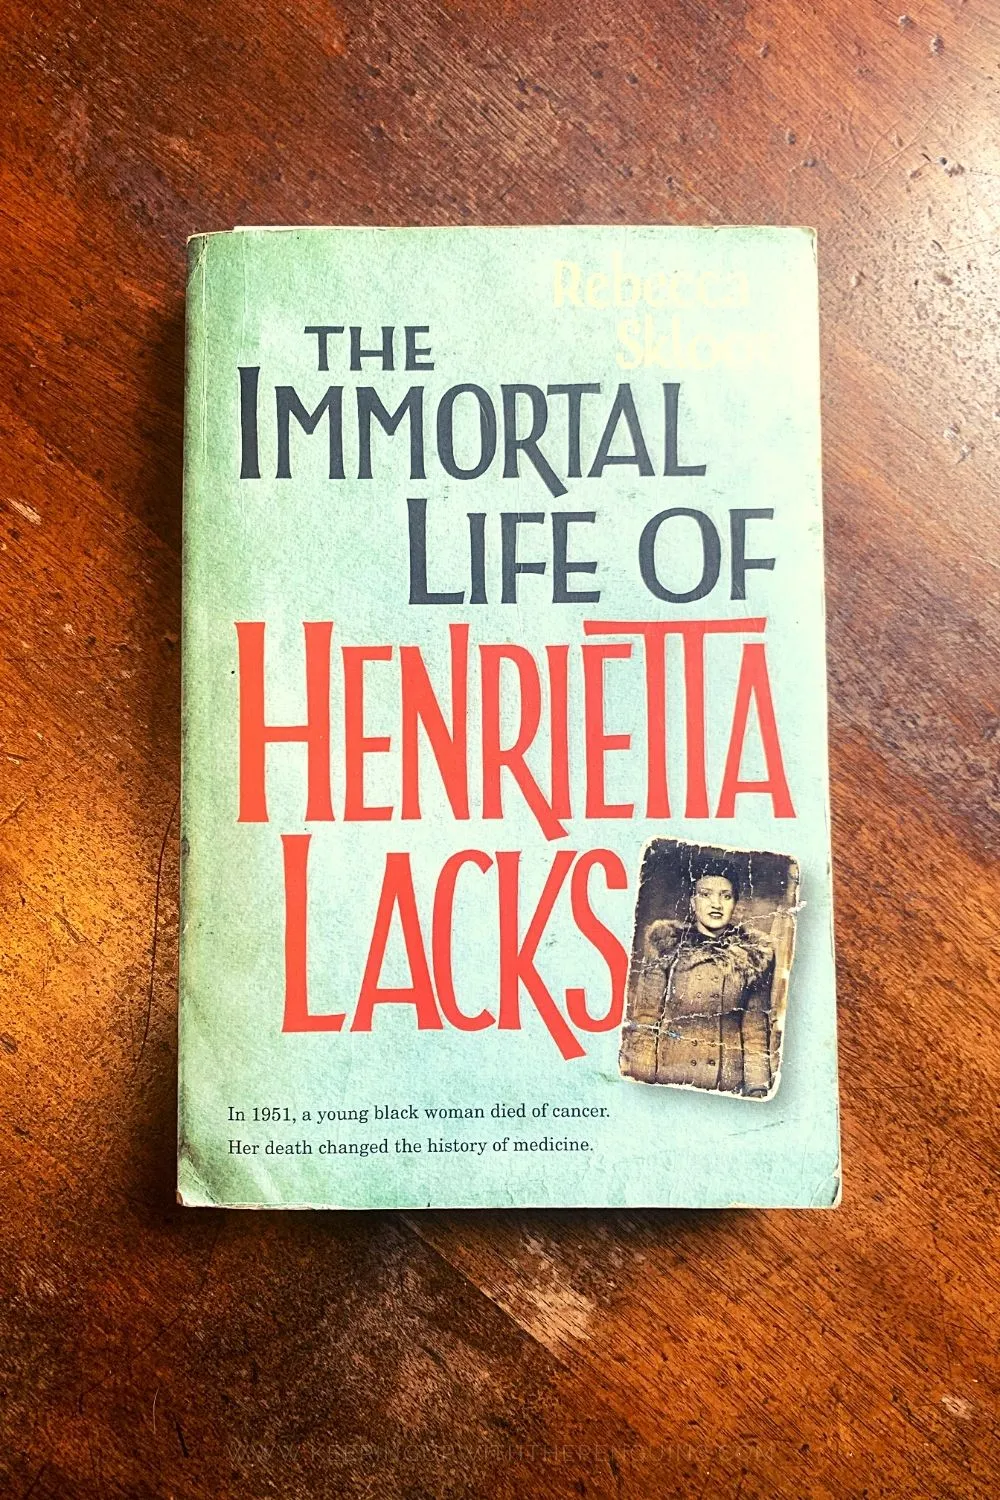 E-Book Biographies "The Immortal Life of Henrietta Lacks"